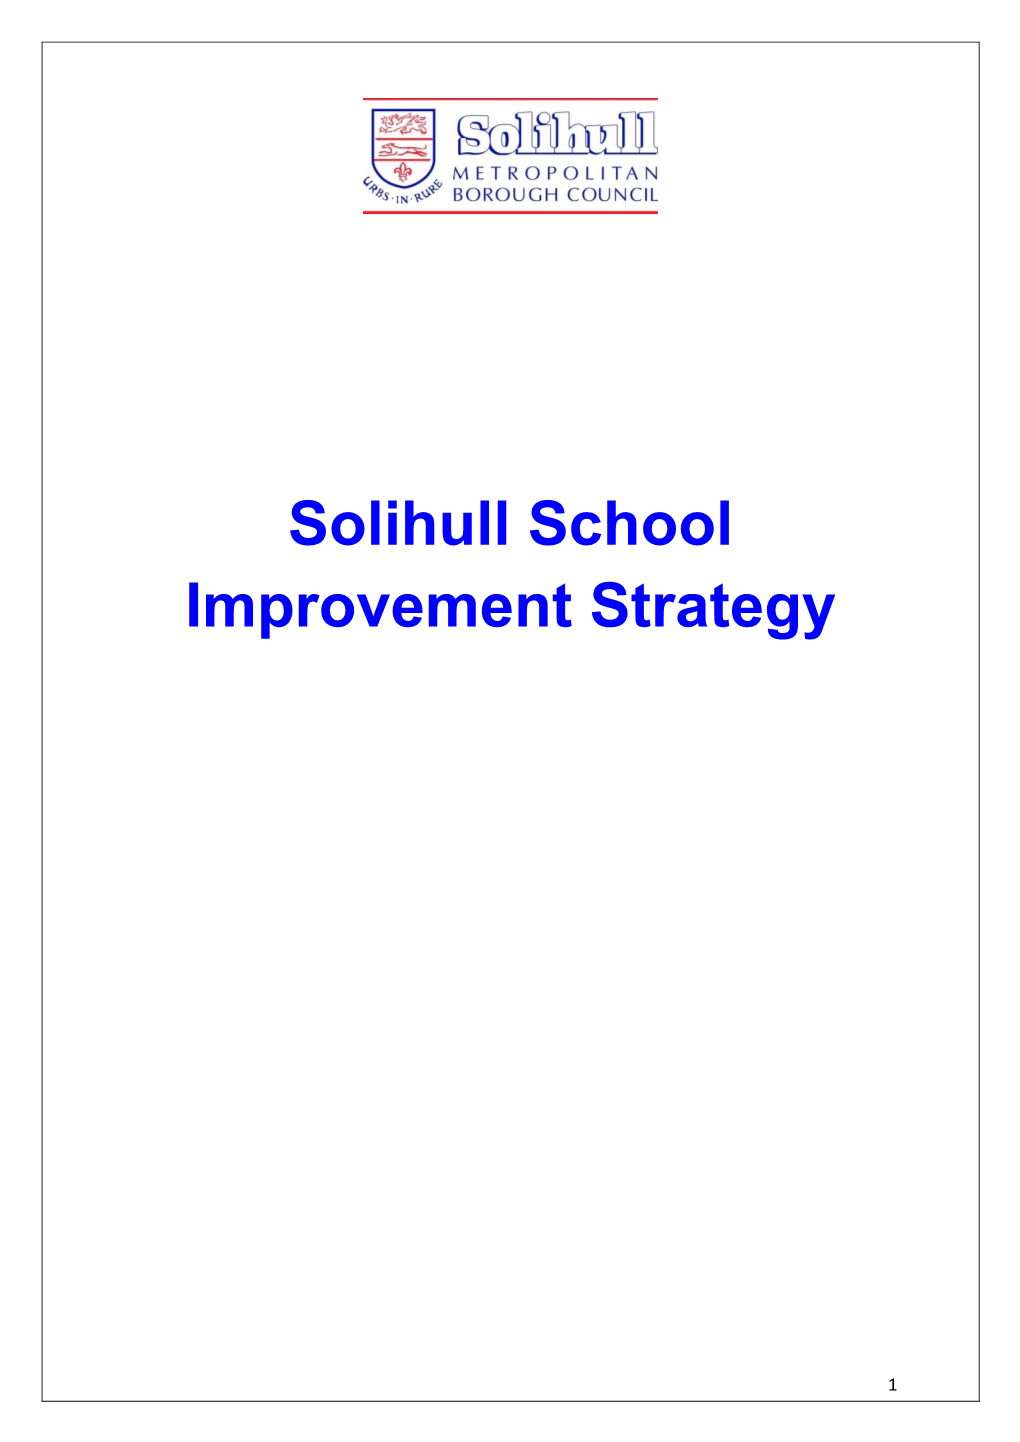 Solihull School Improvement Strategy